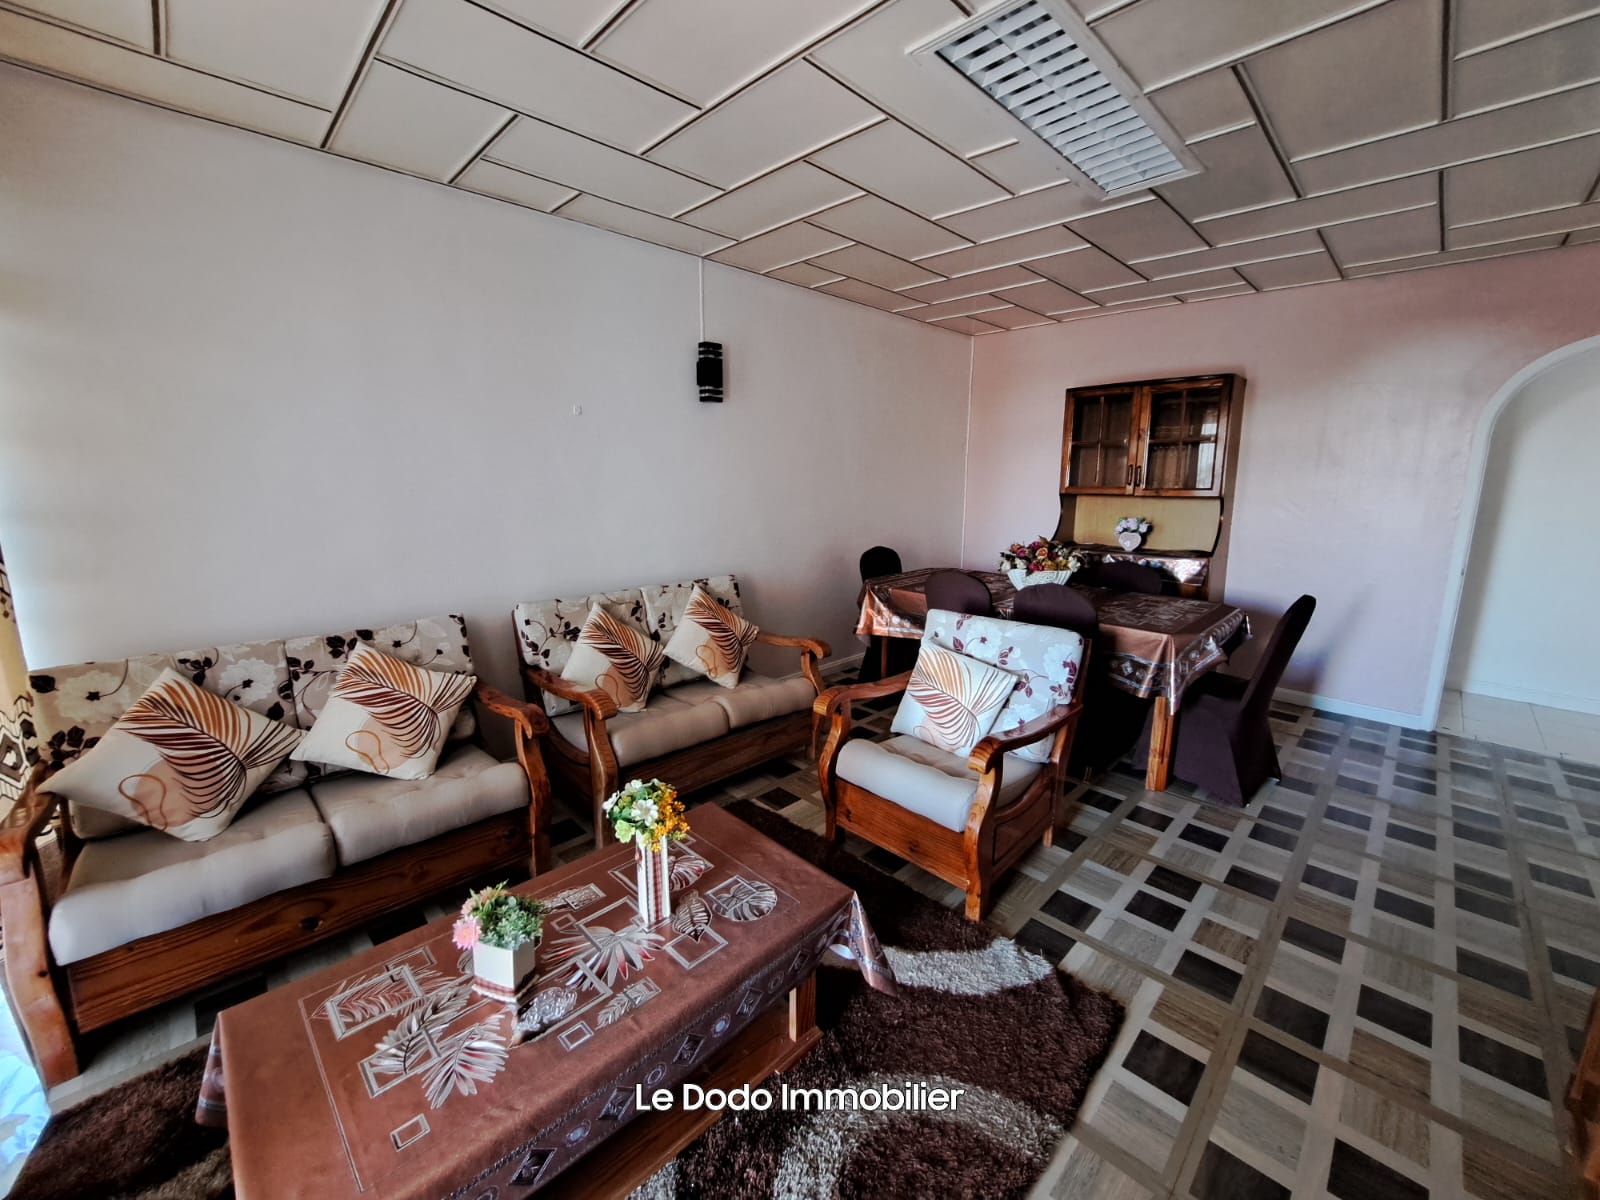 Beautiful Apartment on Rental – Curepipe – Near St Helene – Long Term Rental (Min. 2 Years)